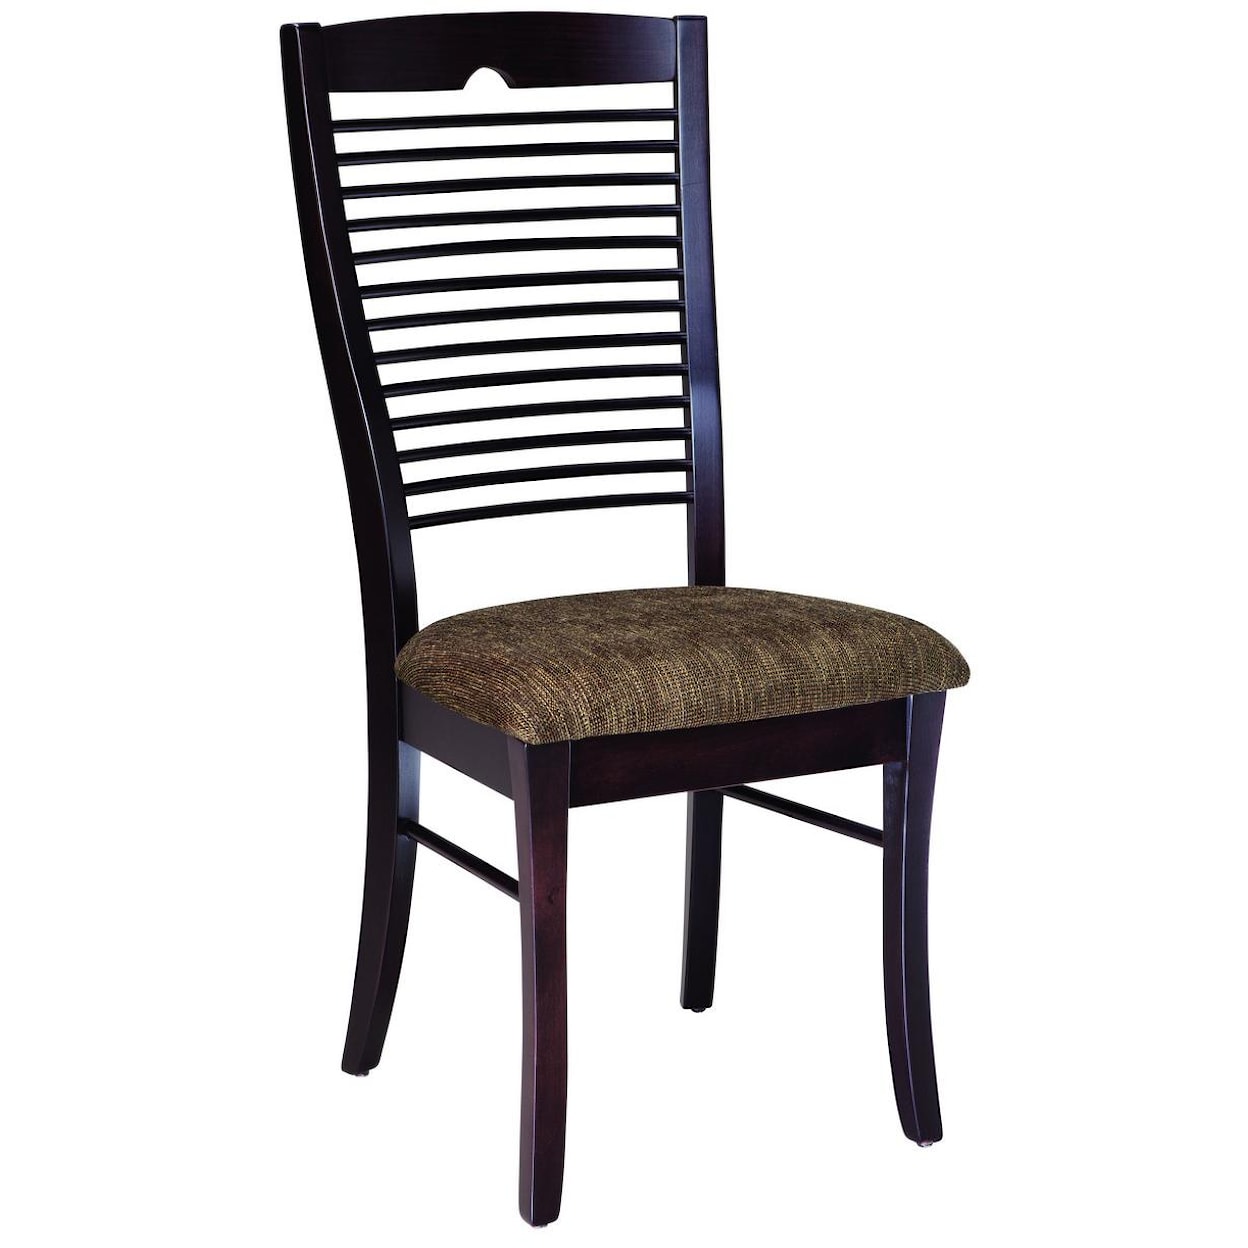 Mavin Romeo Customizable Side Chair